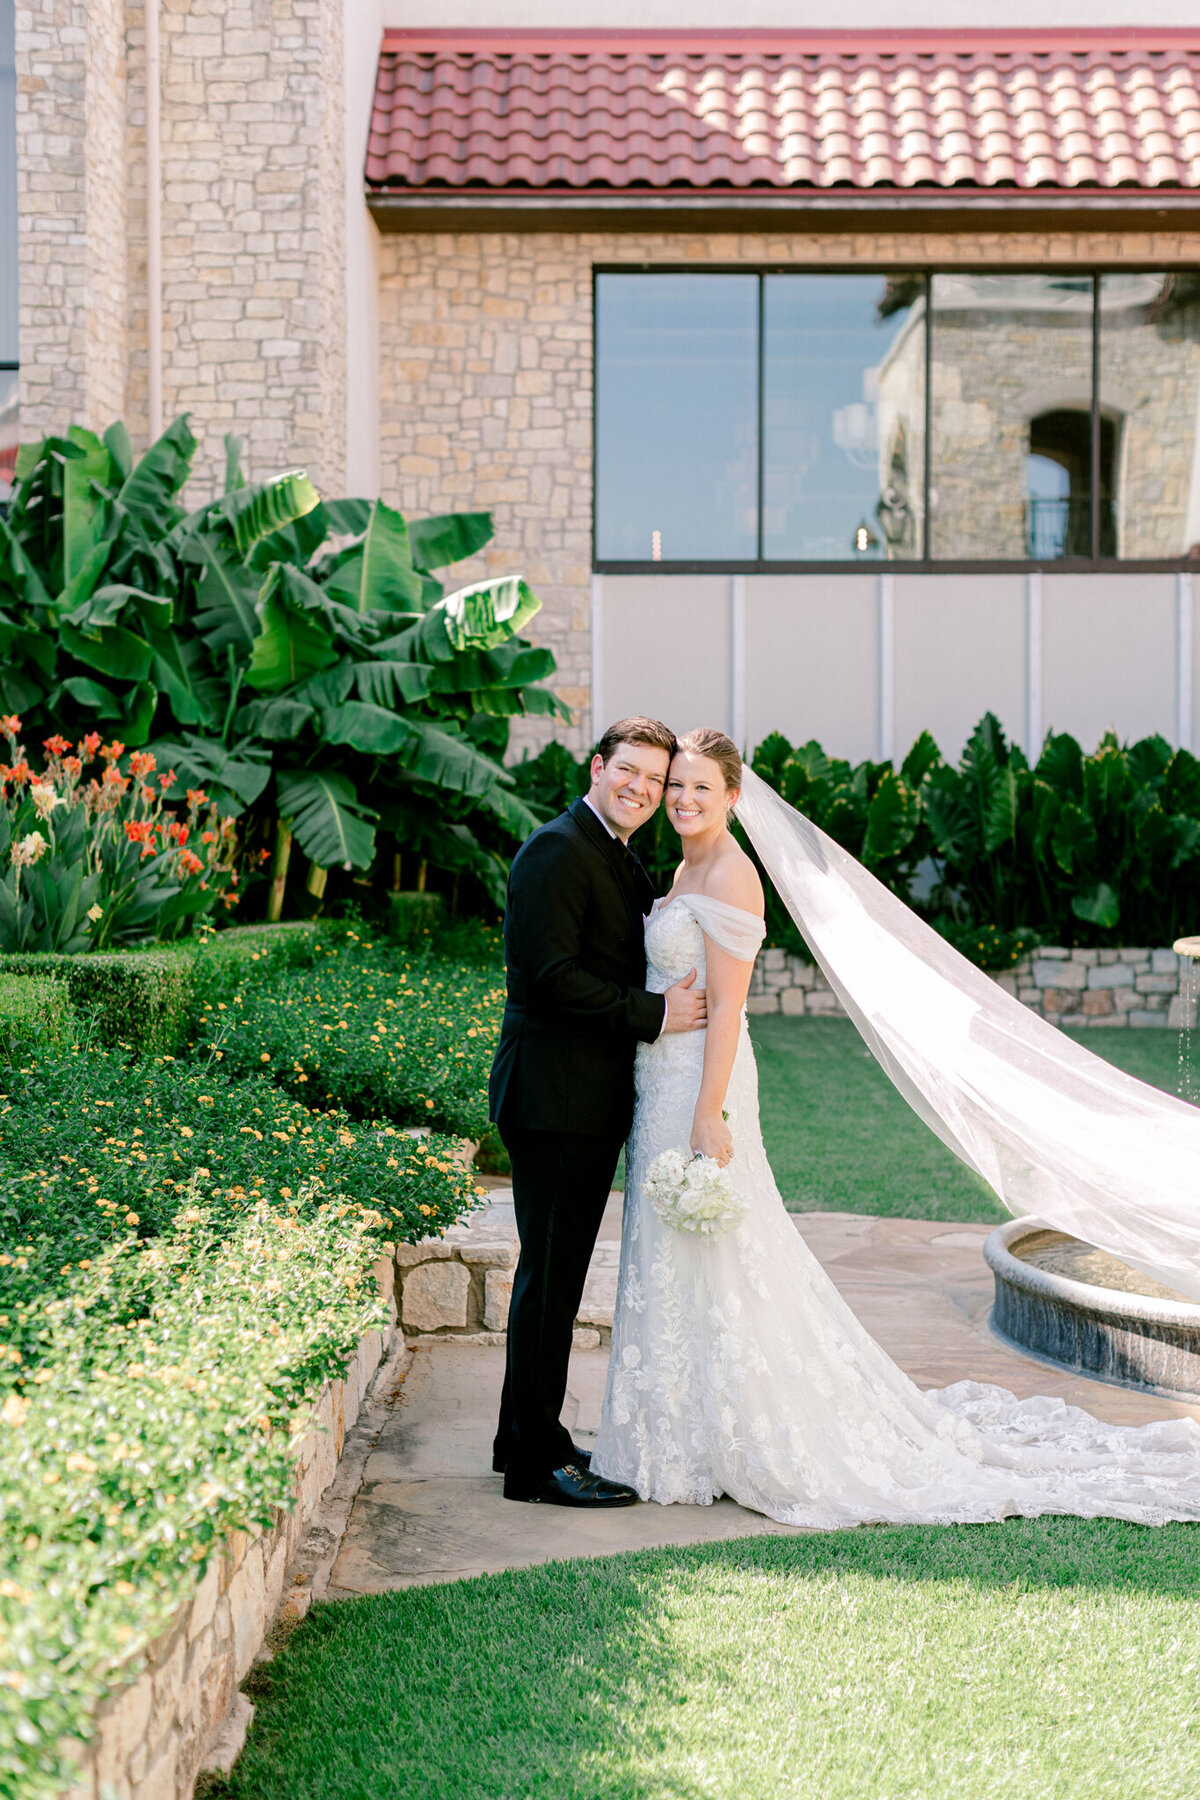 Allie & John Wedding at Royal Oaks Country Club Christ the King Church | Dallas Wedding Photographer | Sami Kathryn Photography-8